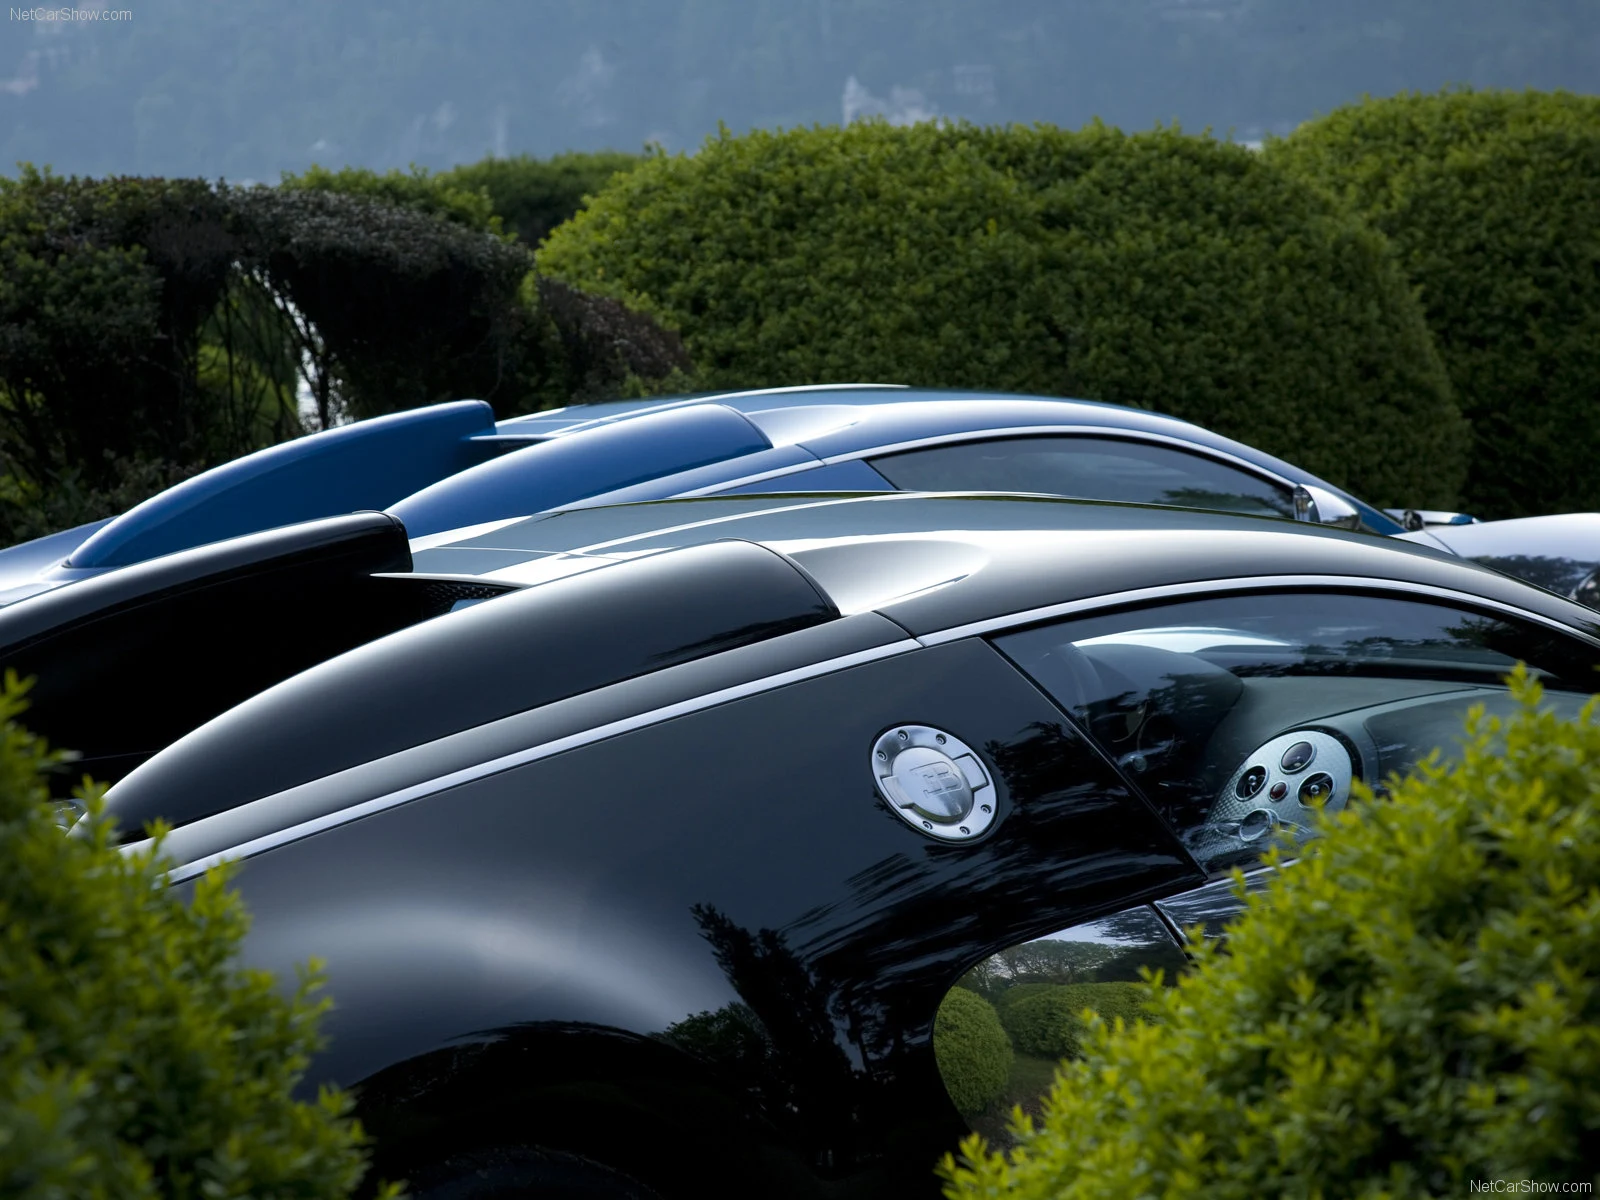 Hình ảnh siêu xe Bugatti Veyron Centenaire 2009 & nội ngoại thất